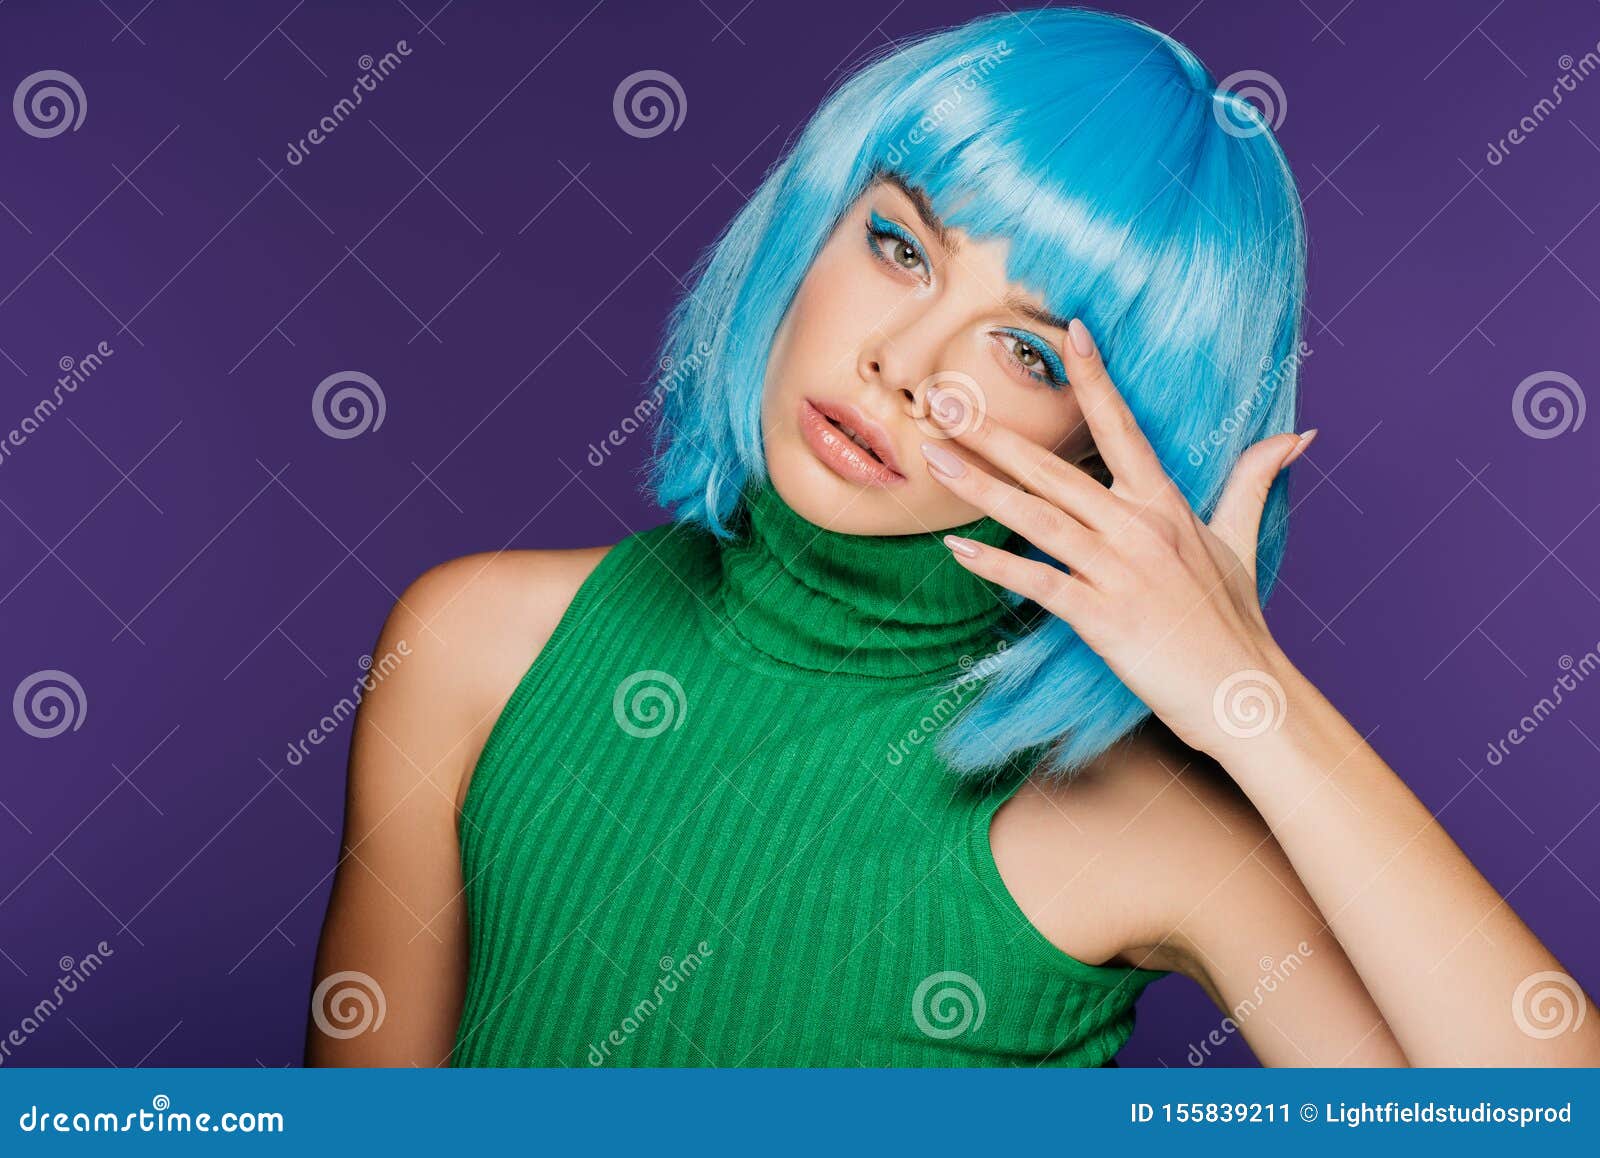 Blue hair TikTok girl trend - wide 1